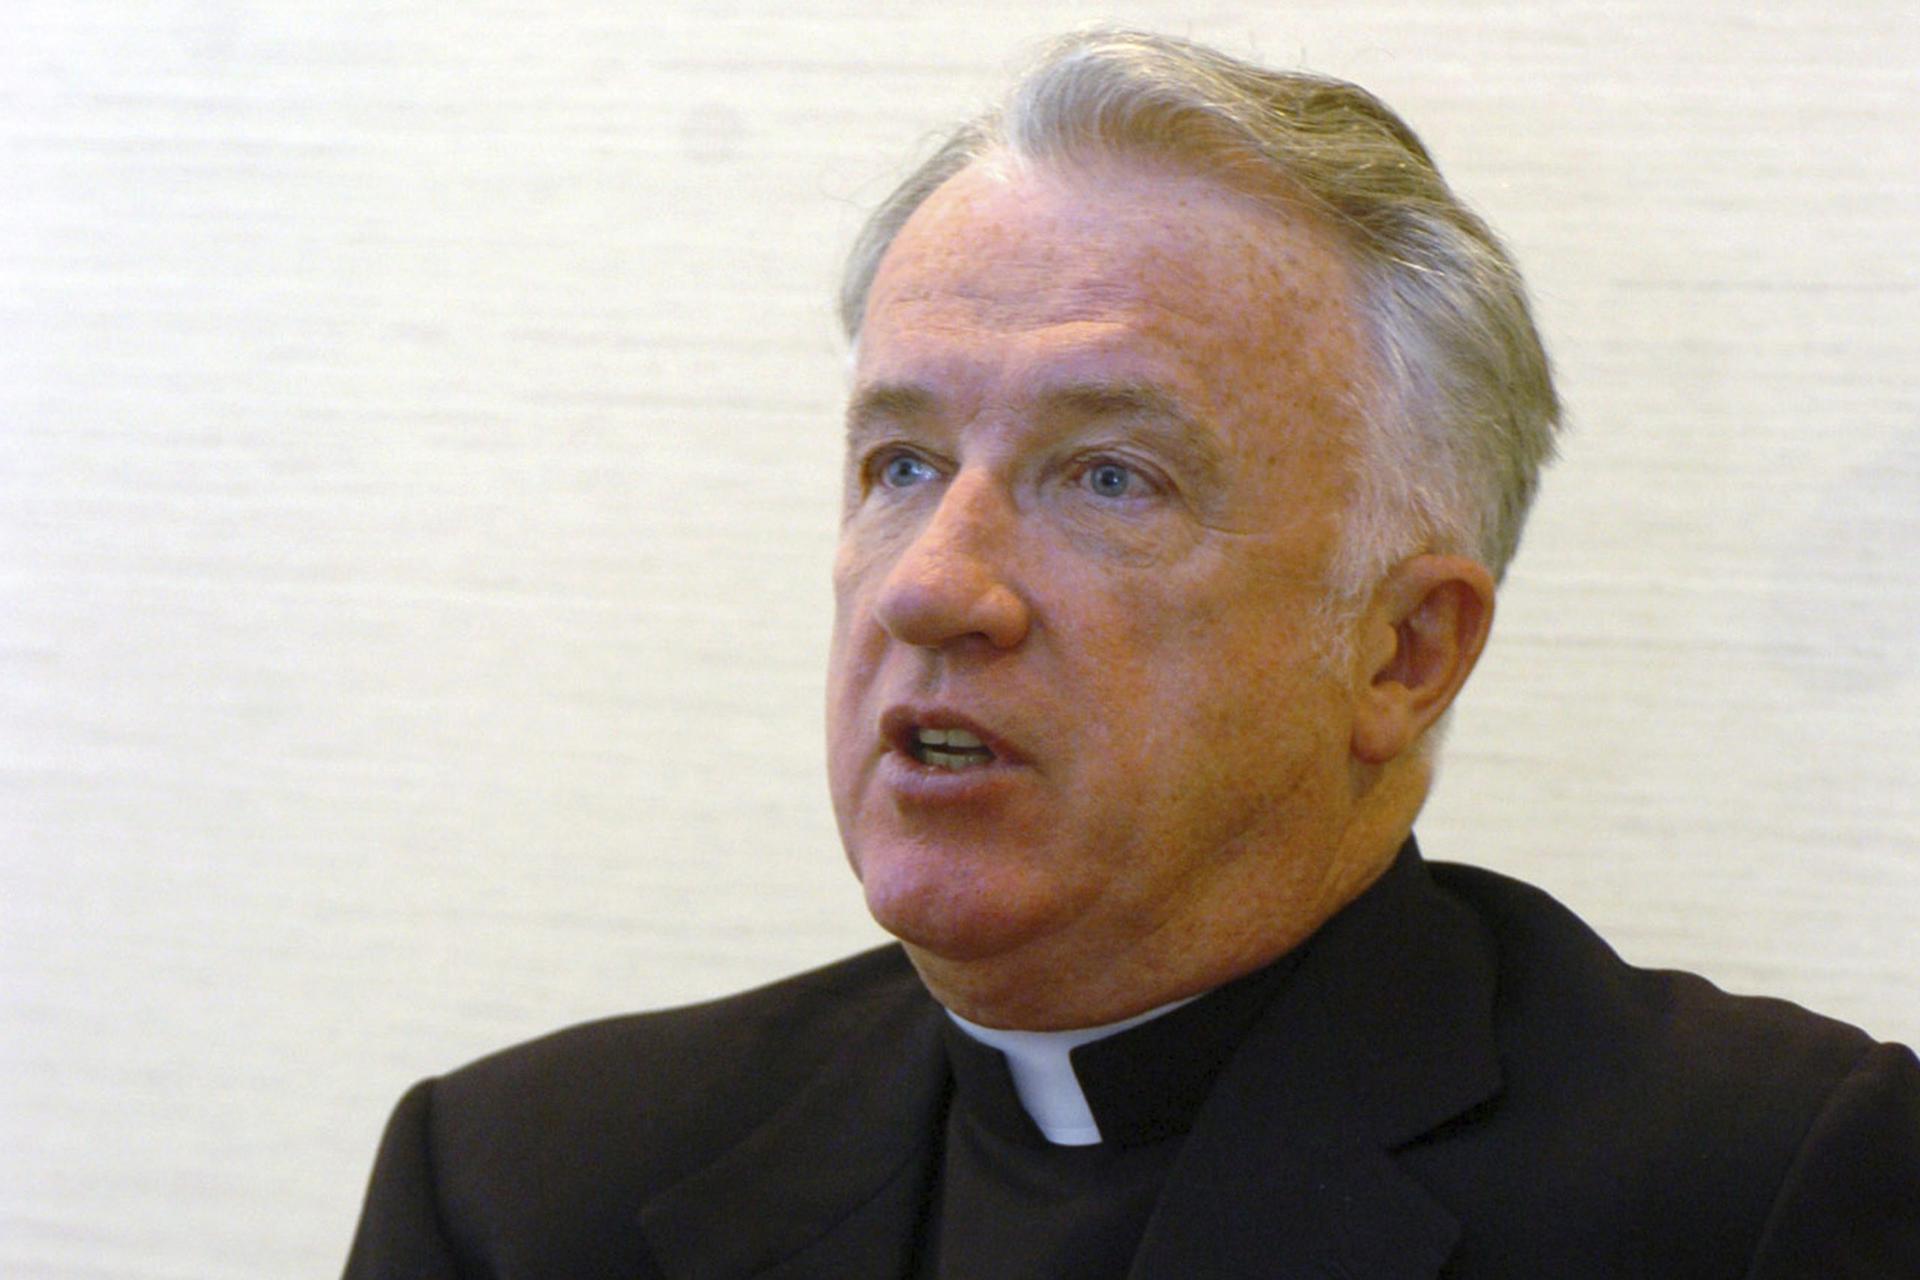 Former West Virginia bishop apologizes, reimburses diocese